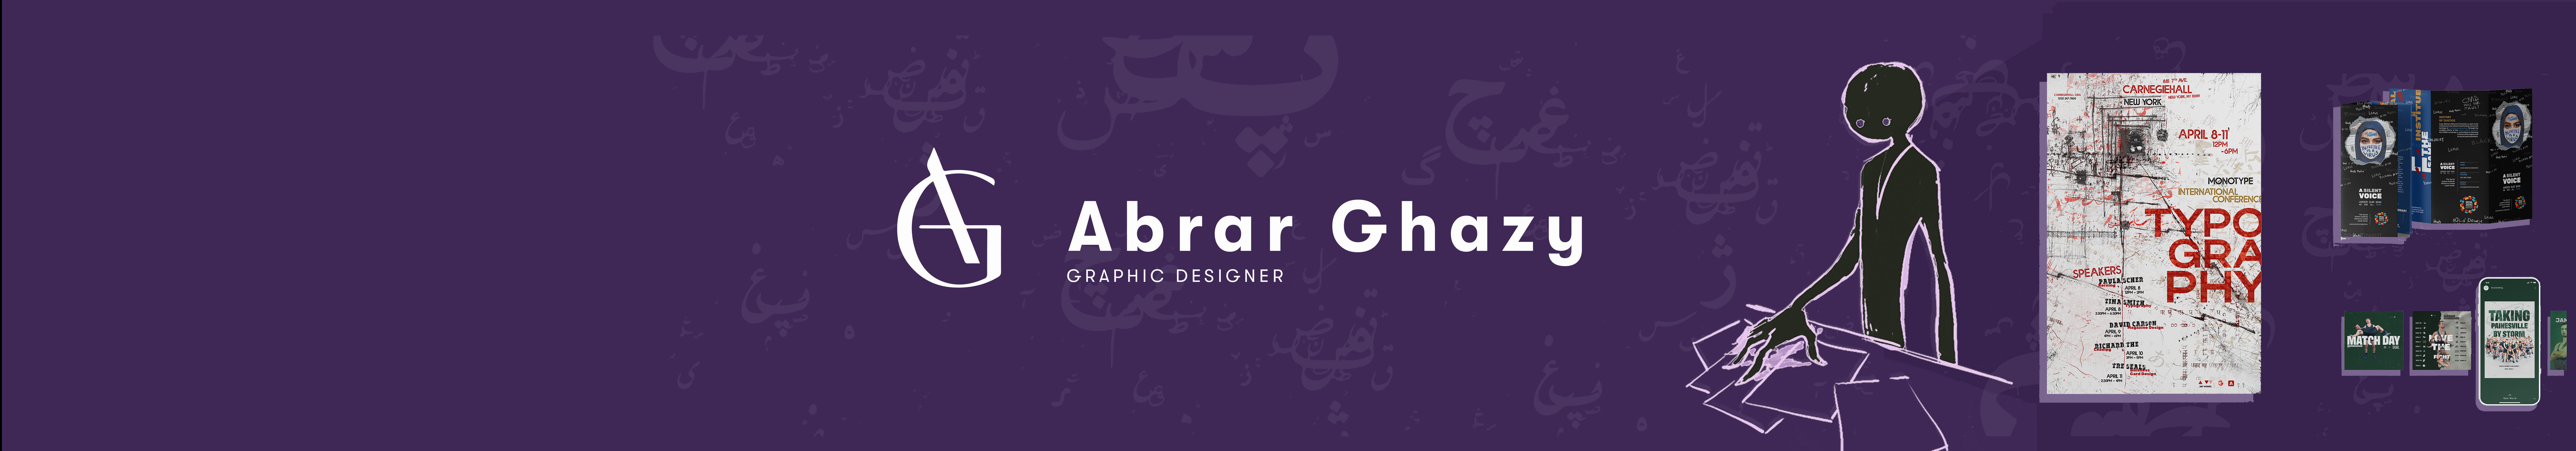 Abrar Ghazy's profile banner